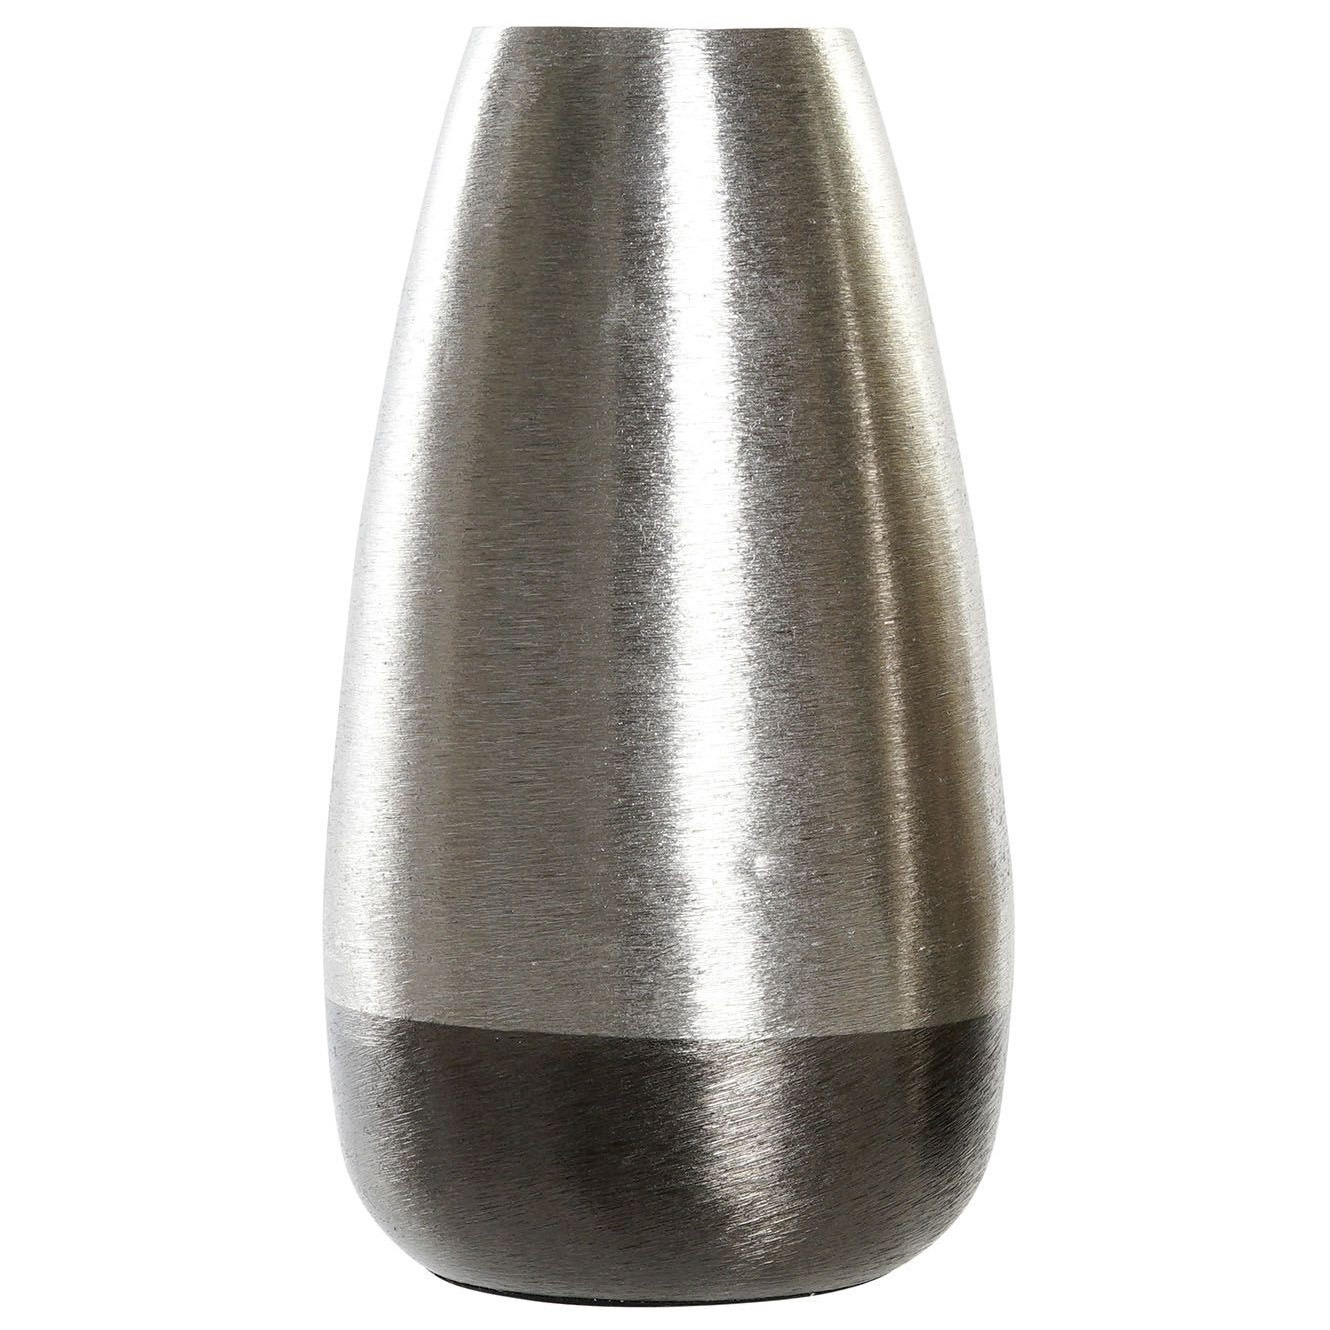 Bloemenvaas van alluminium zilver 16 x 31 cm